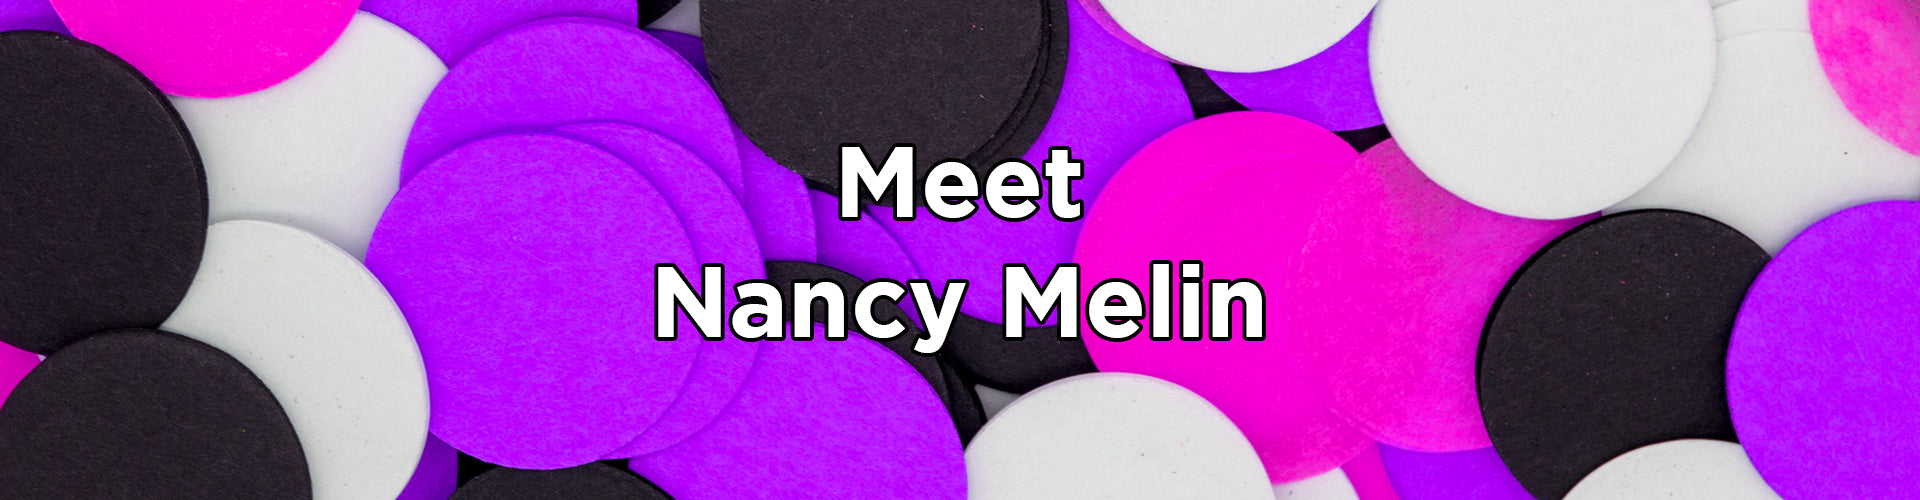 Meet Nancy Melin